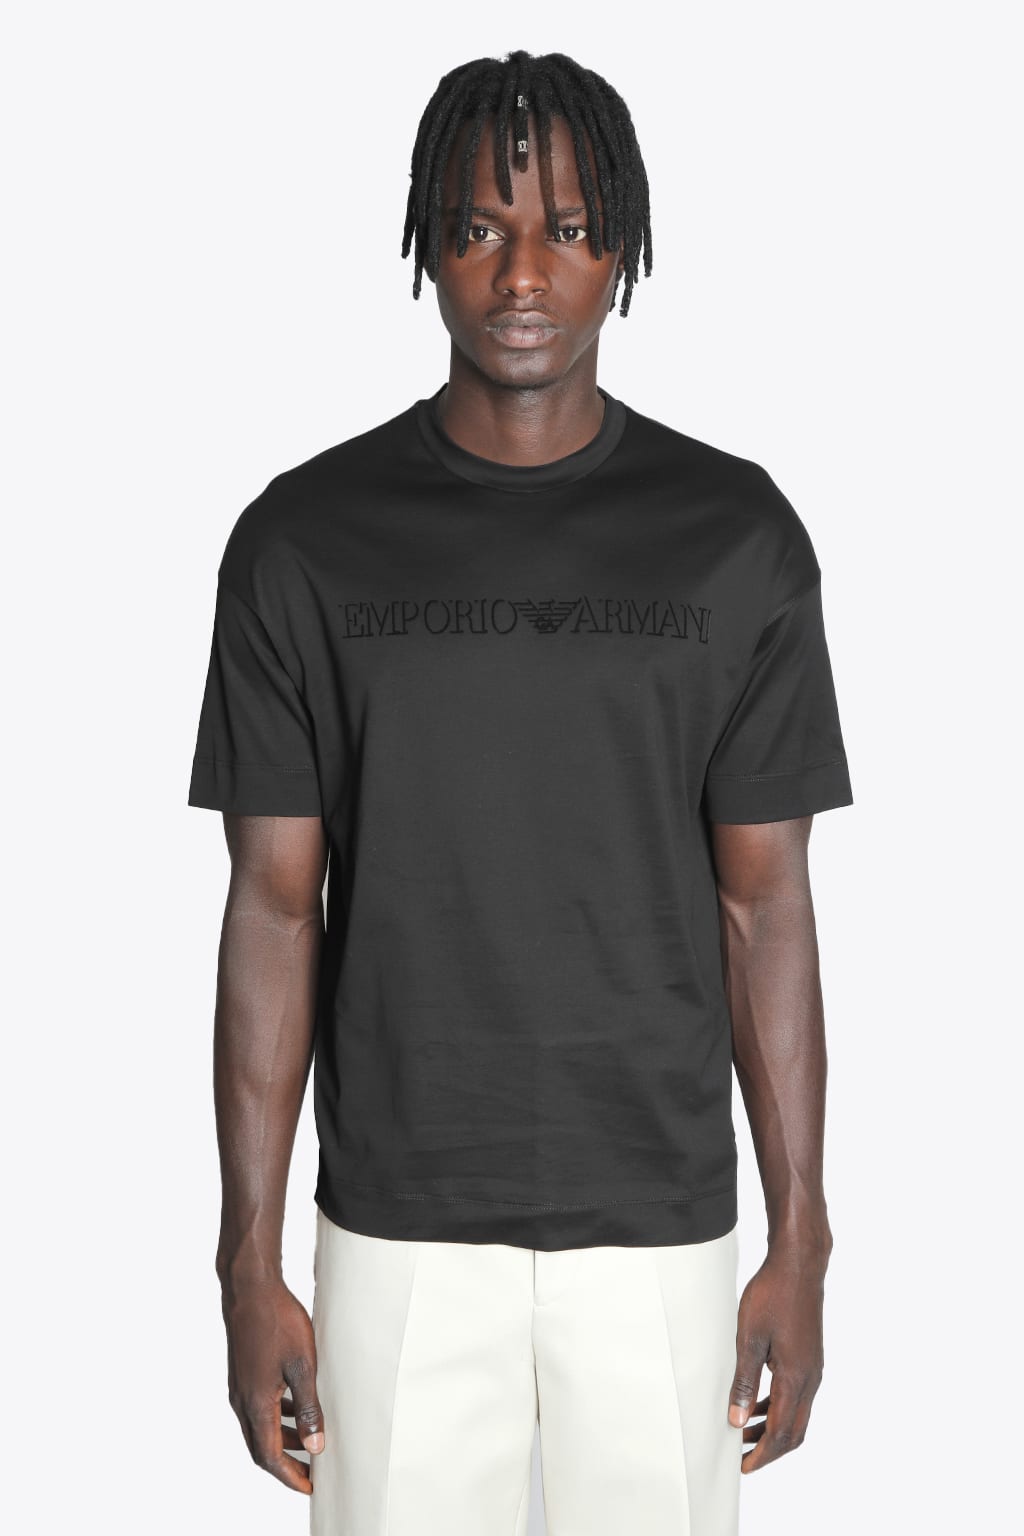 Emporio Armani T-shirt Black cotton t-shirt with flocked logo.